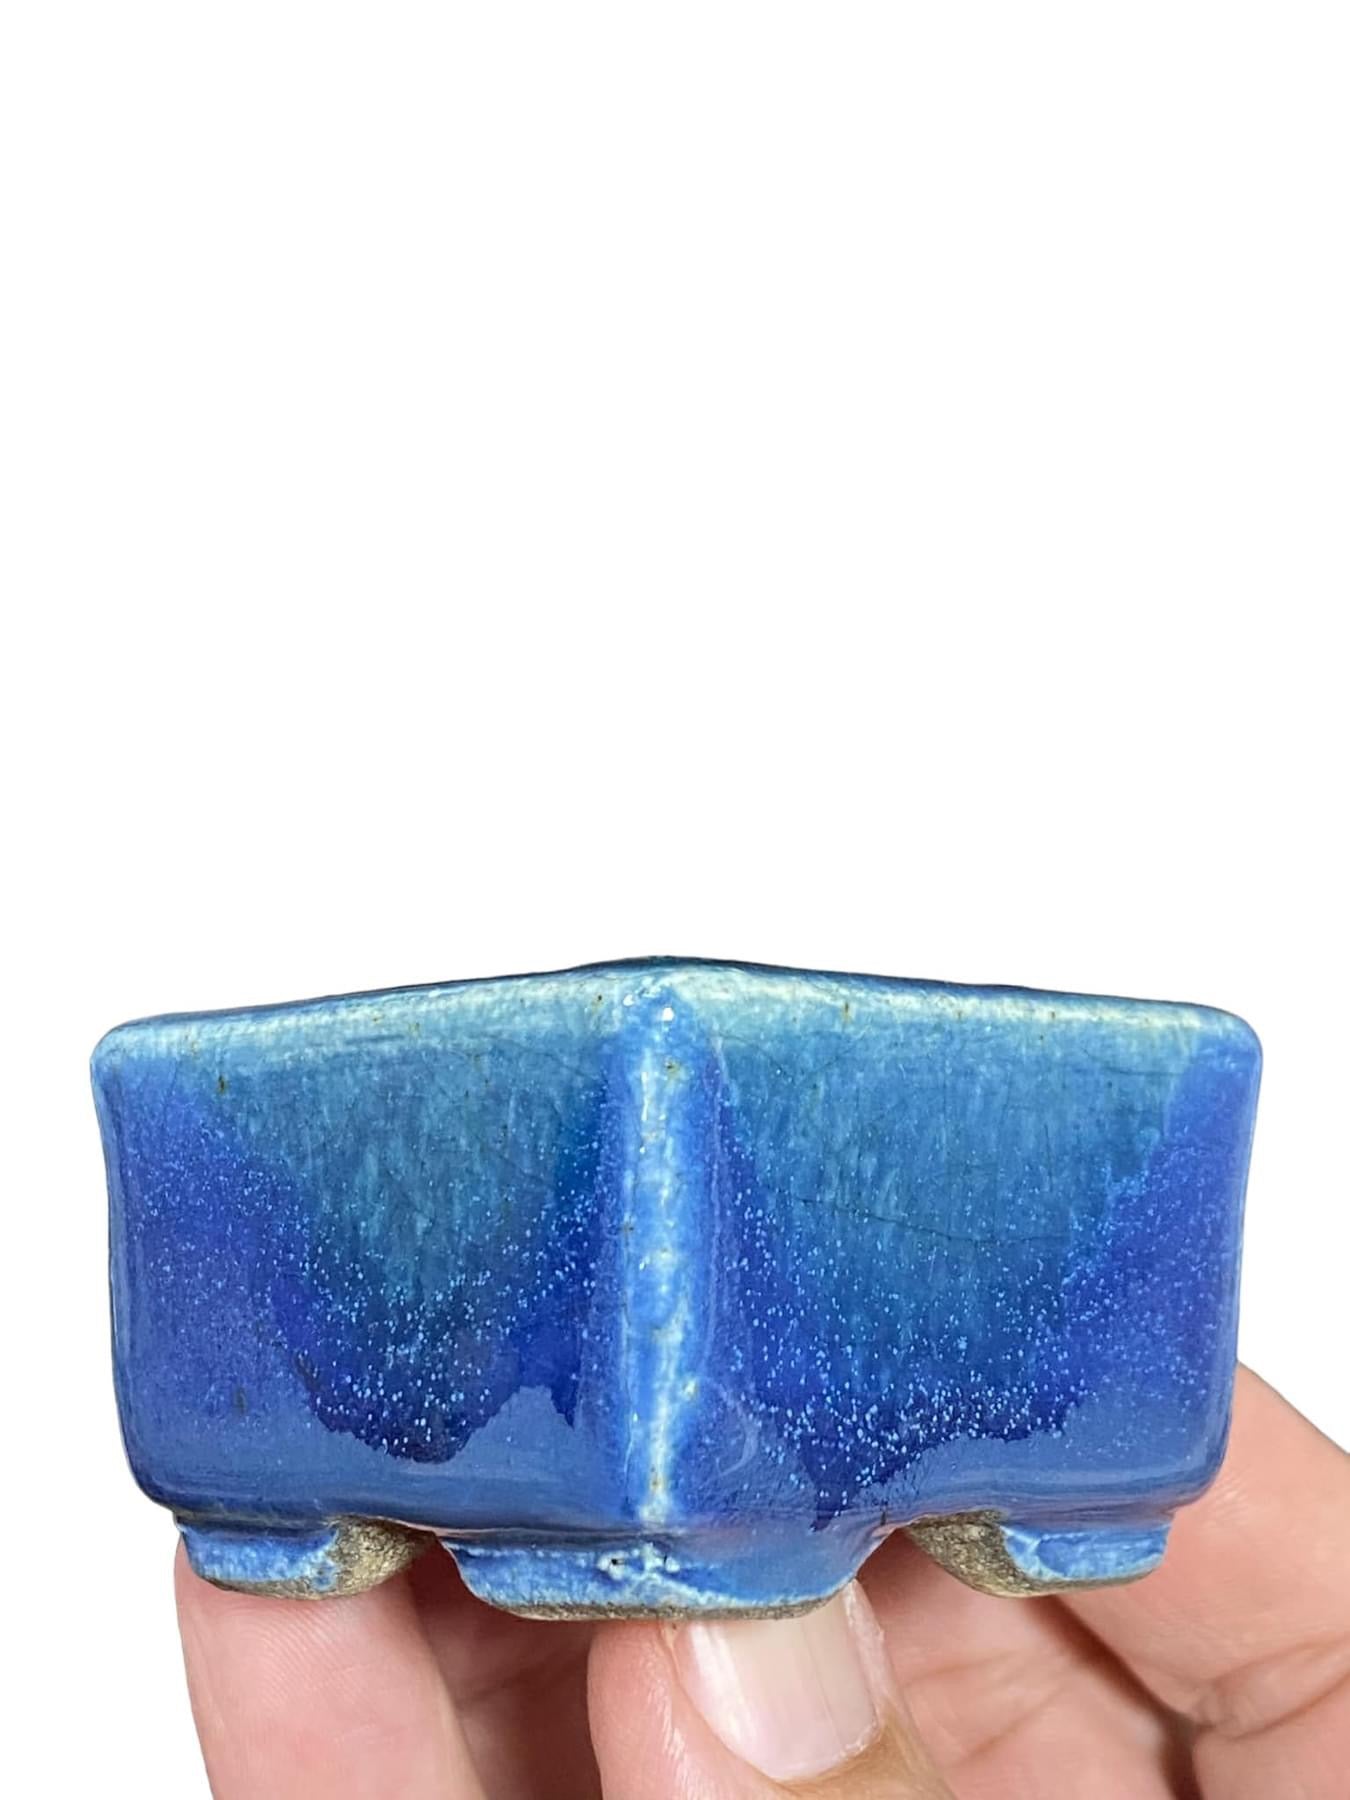 Satomi Terahata - Multi Blue Shade Glazed Bonsai or Accent Pot (2-7/32” wide)